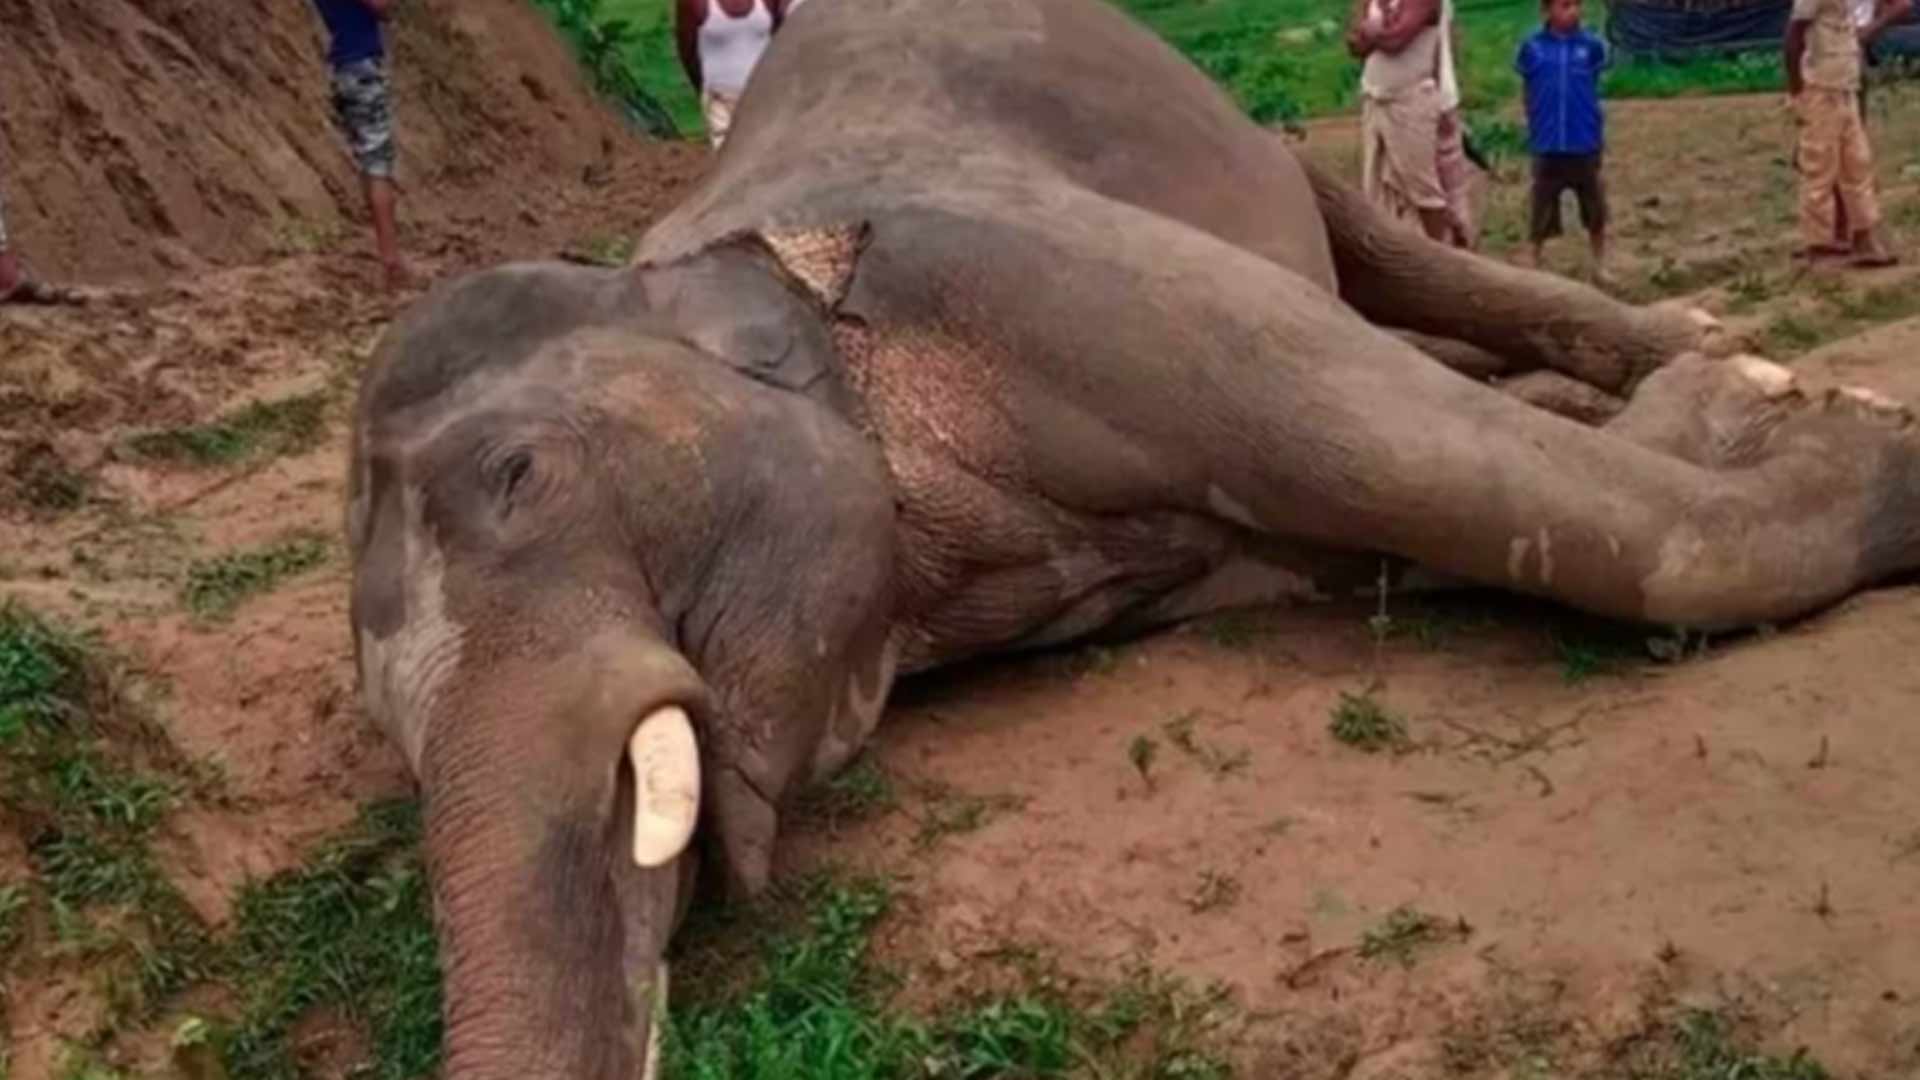 Elephant killing in Bangladesh Who is responsible